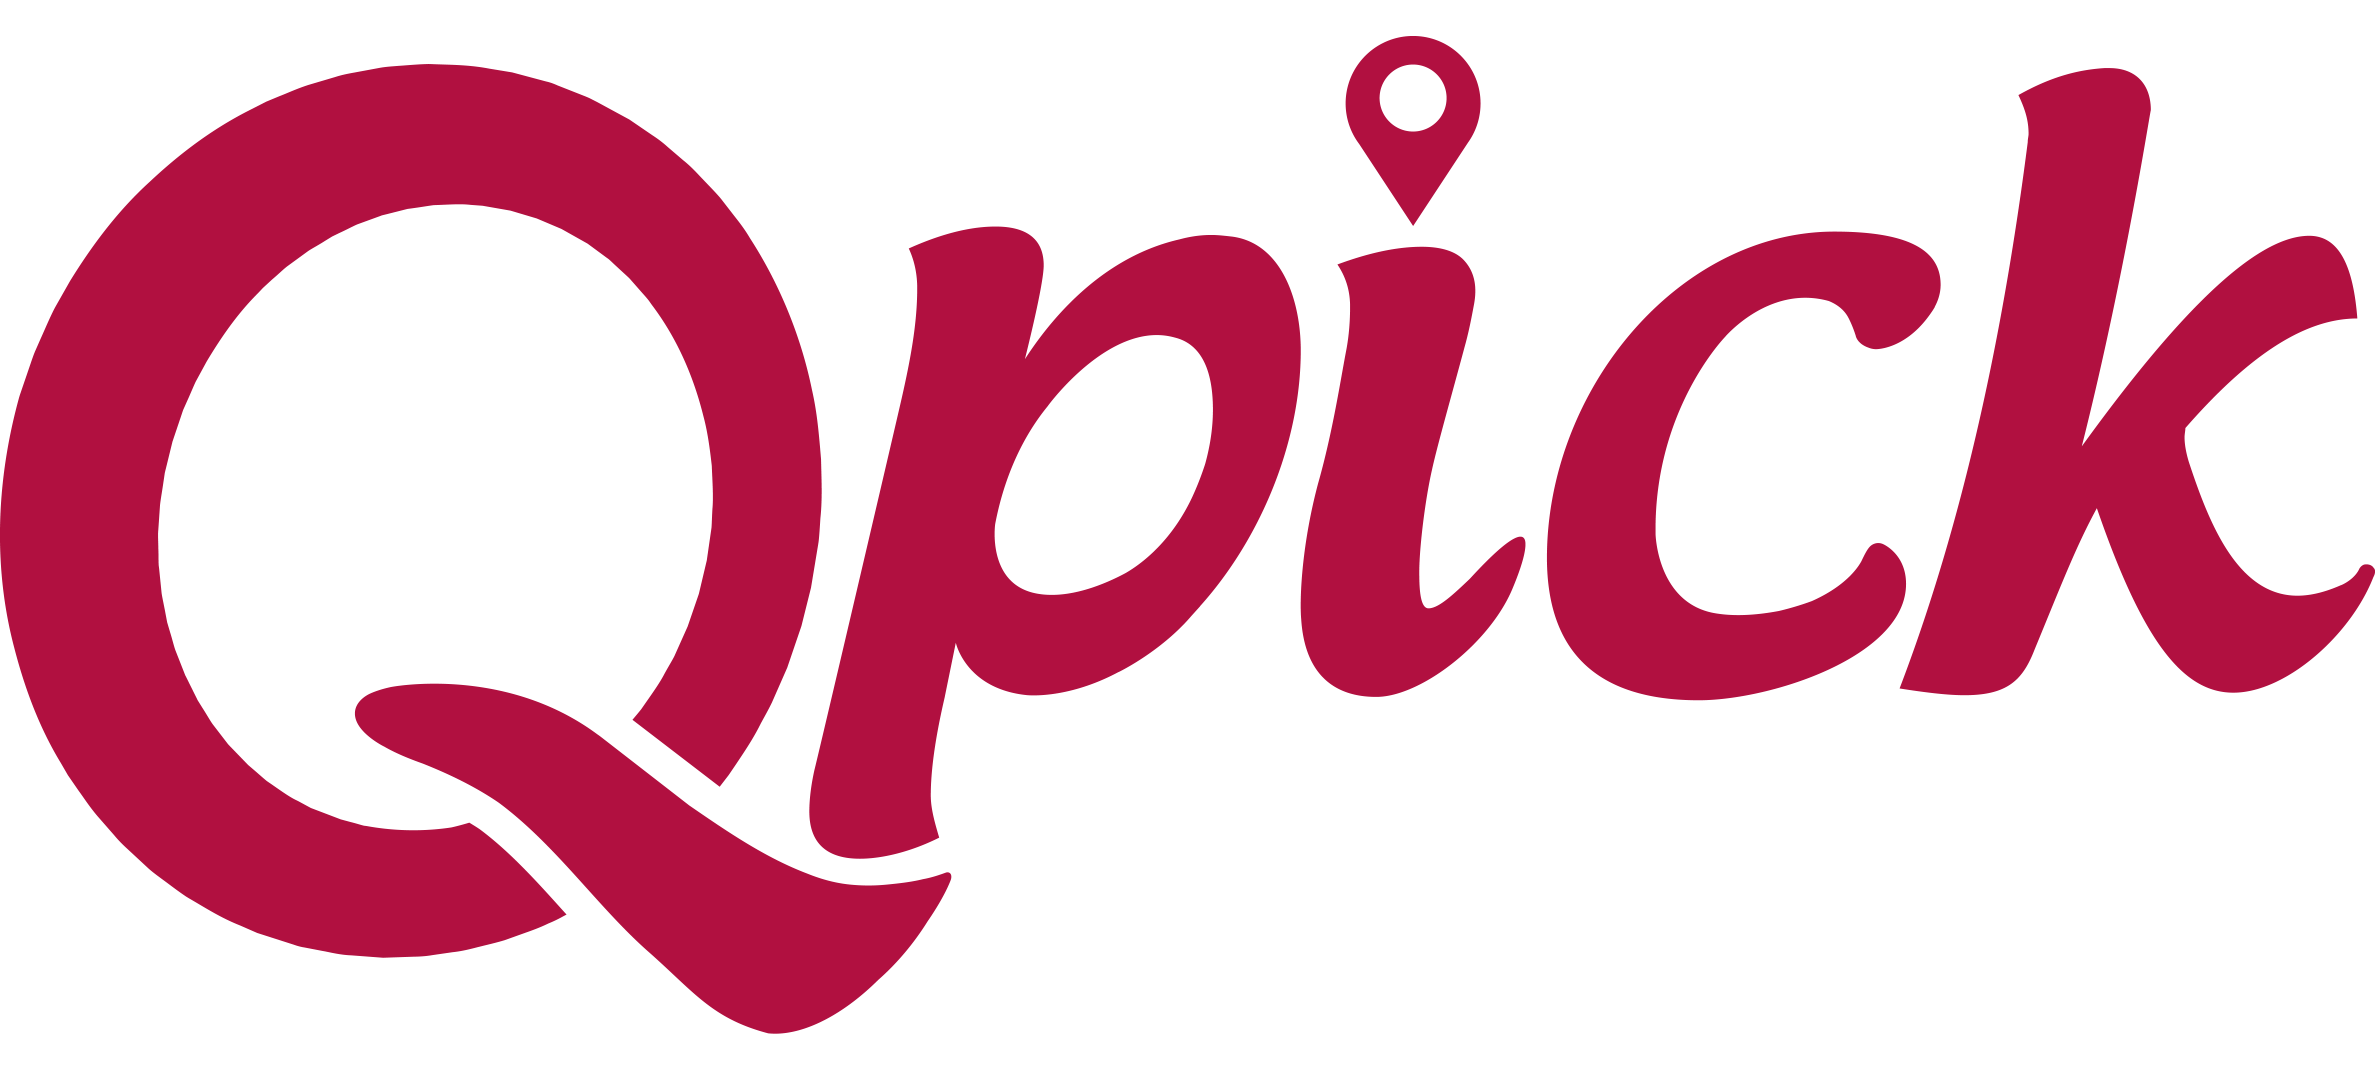 Qpick logo